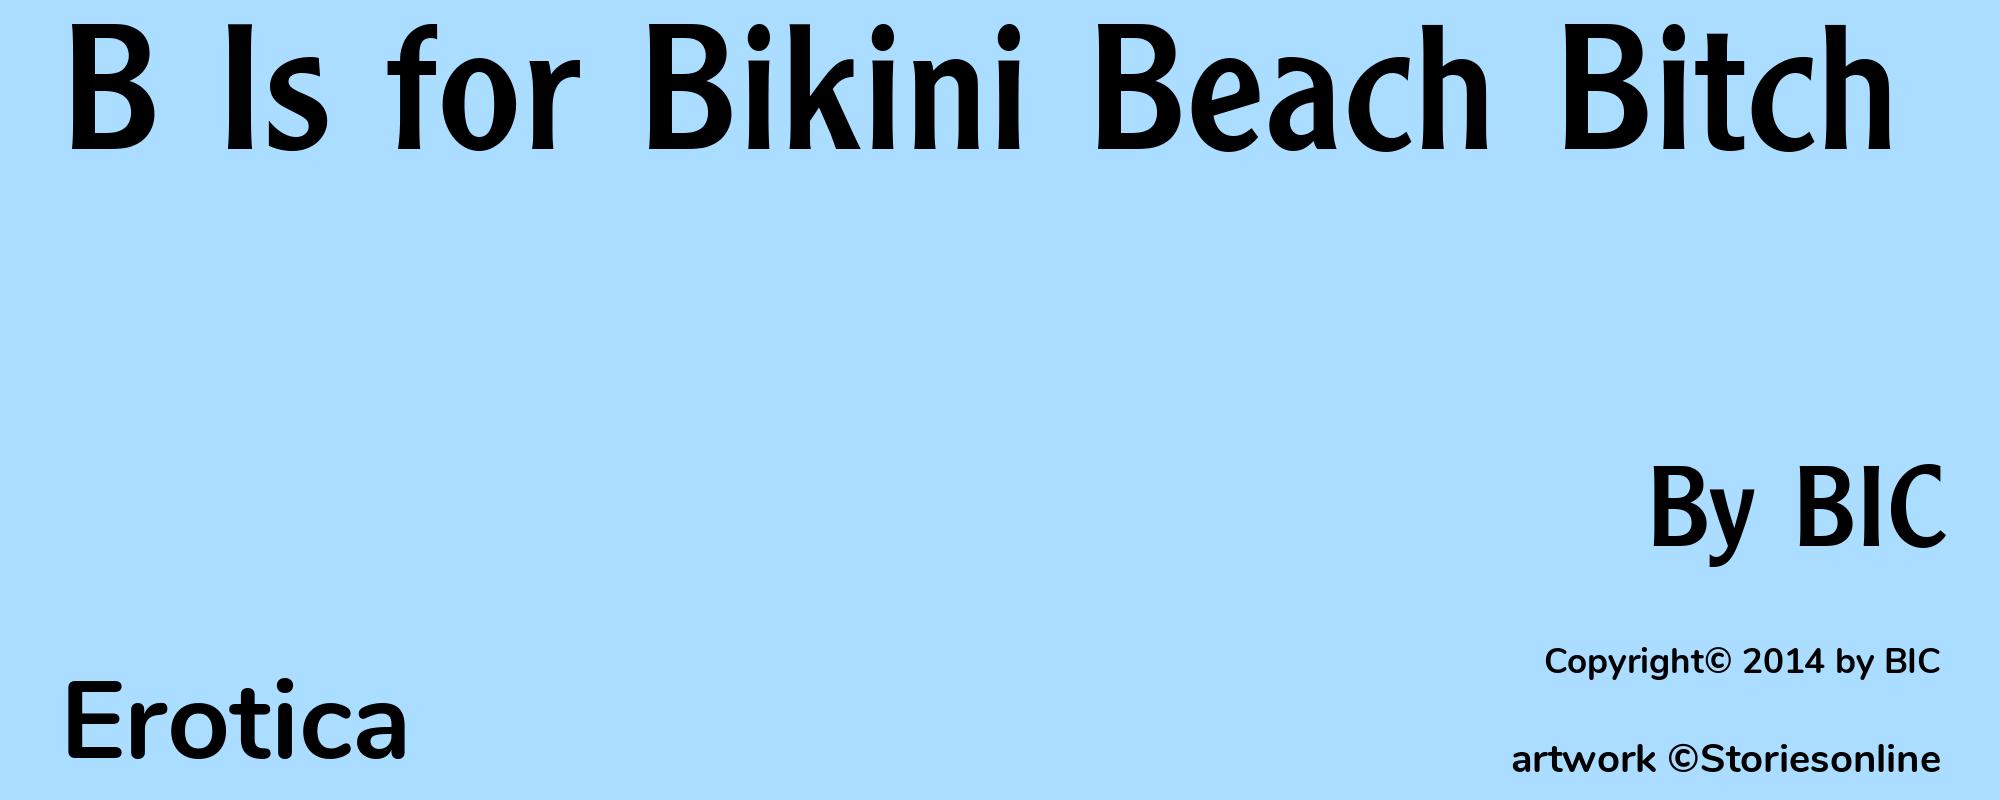 B Is for Bikini Beach Bitch - Cover